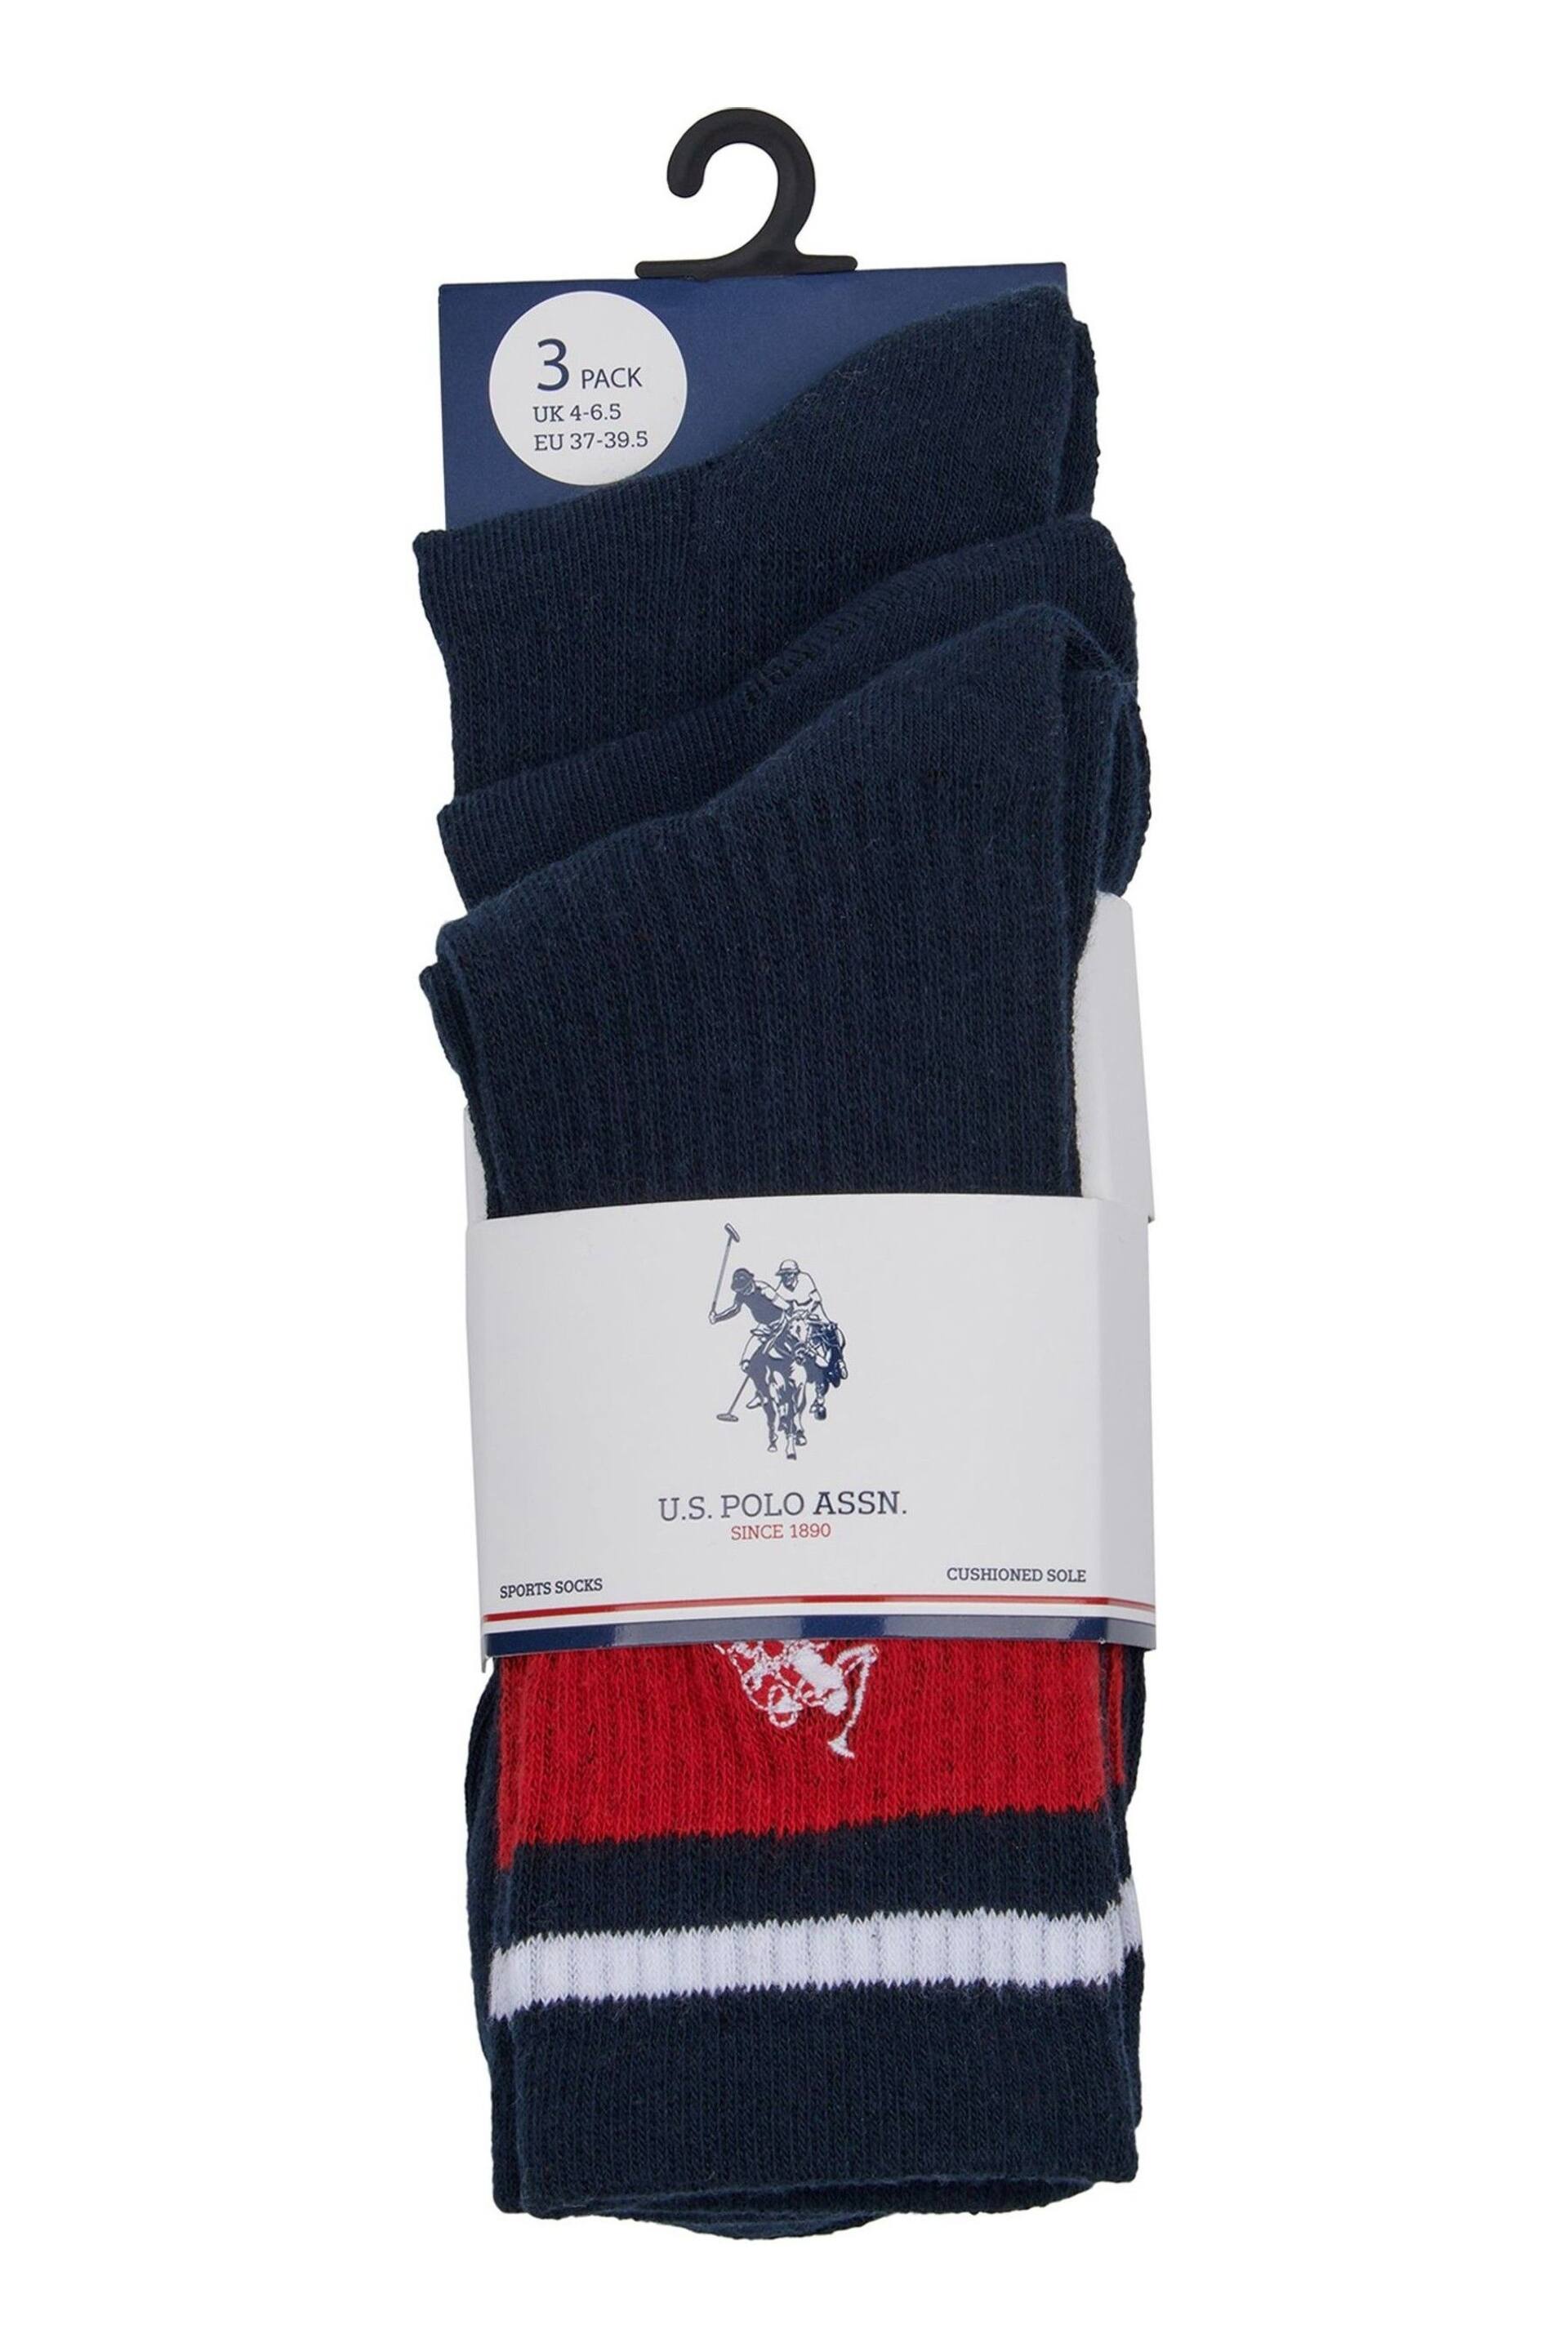 U.S. Polo Assn. Brand Stripe Sports Socks 3 Pack - Image 2 of 3